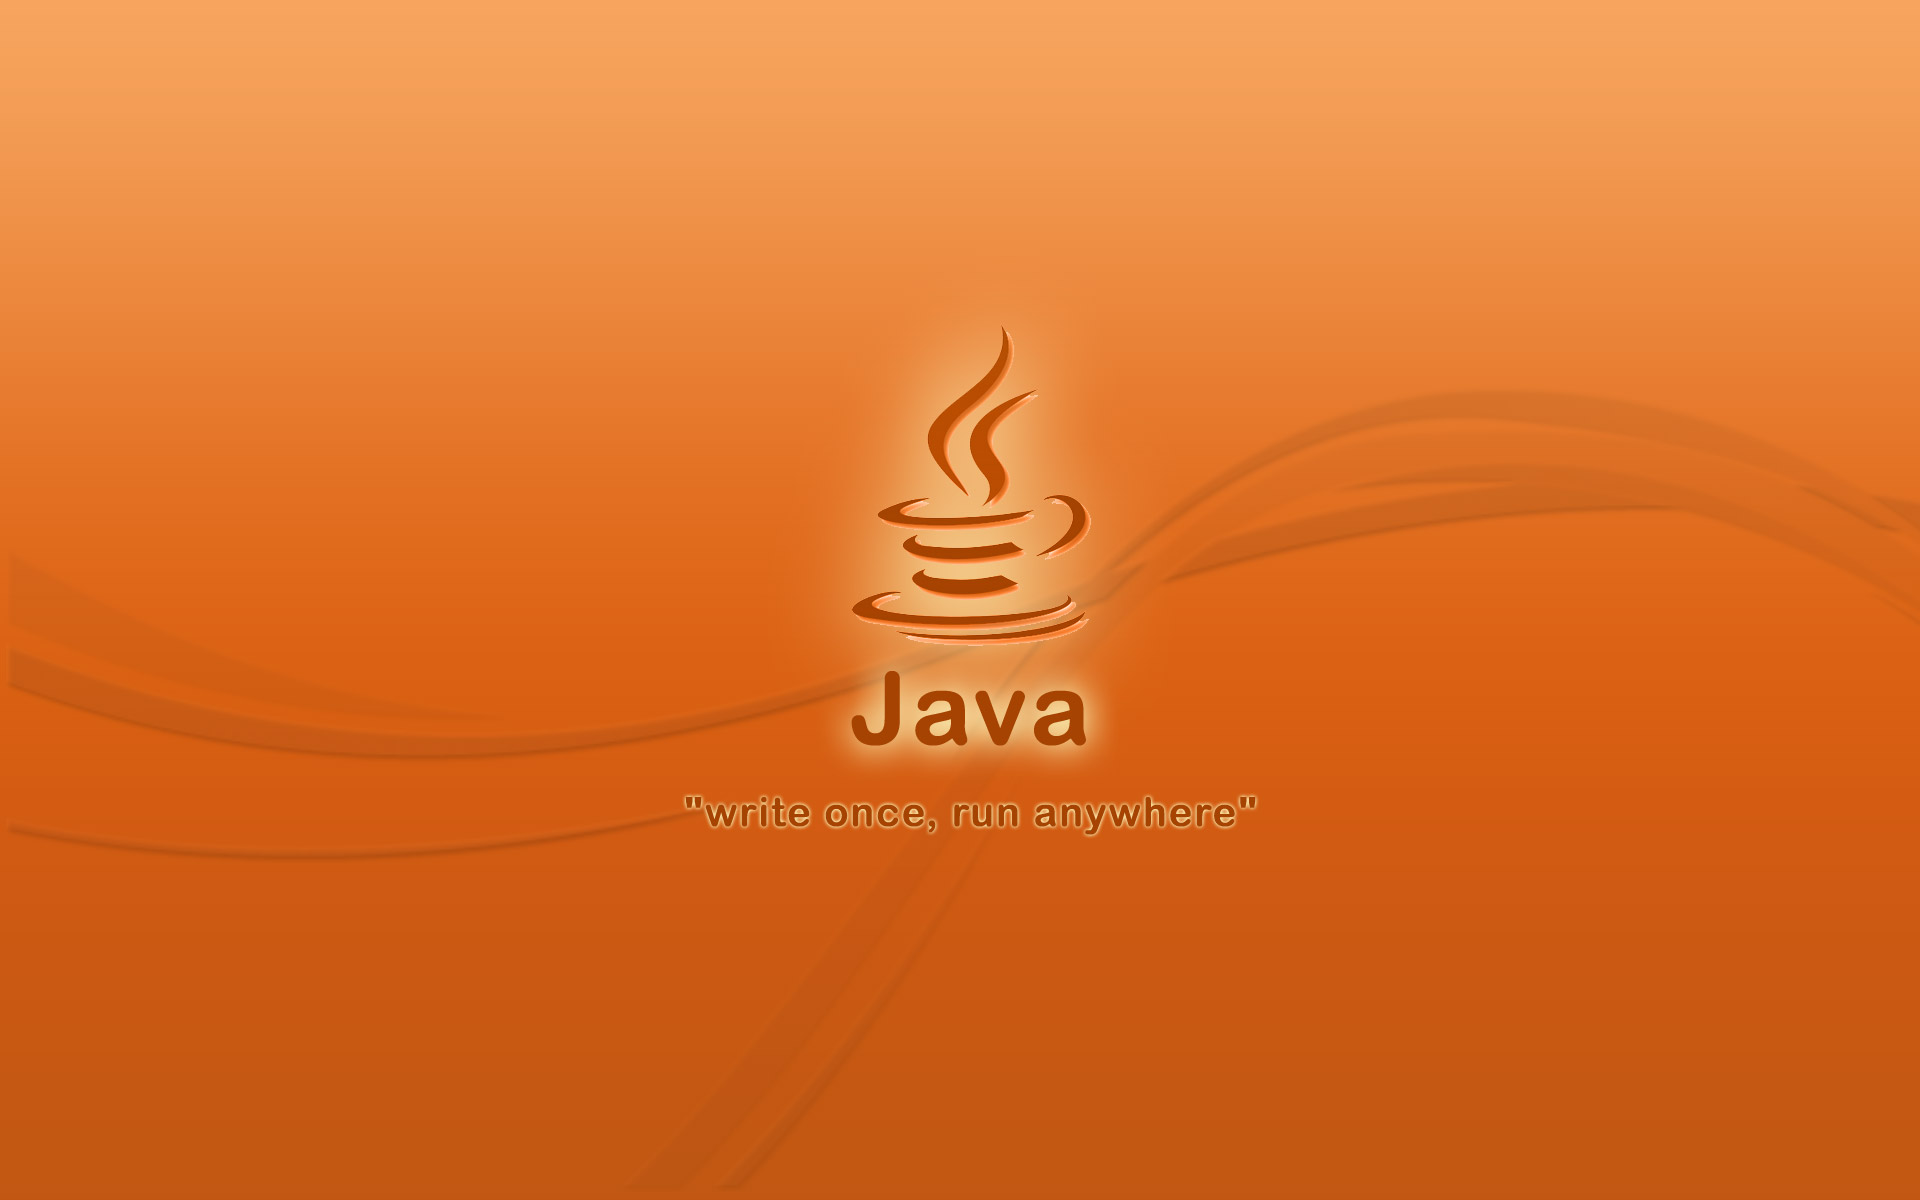 Java by Marcos Varon - Desktop Wallpaper